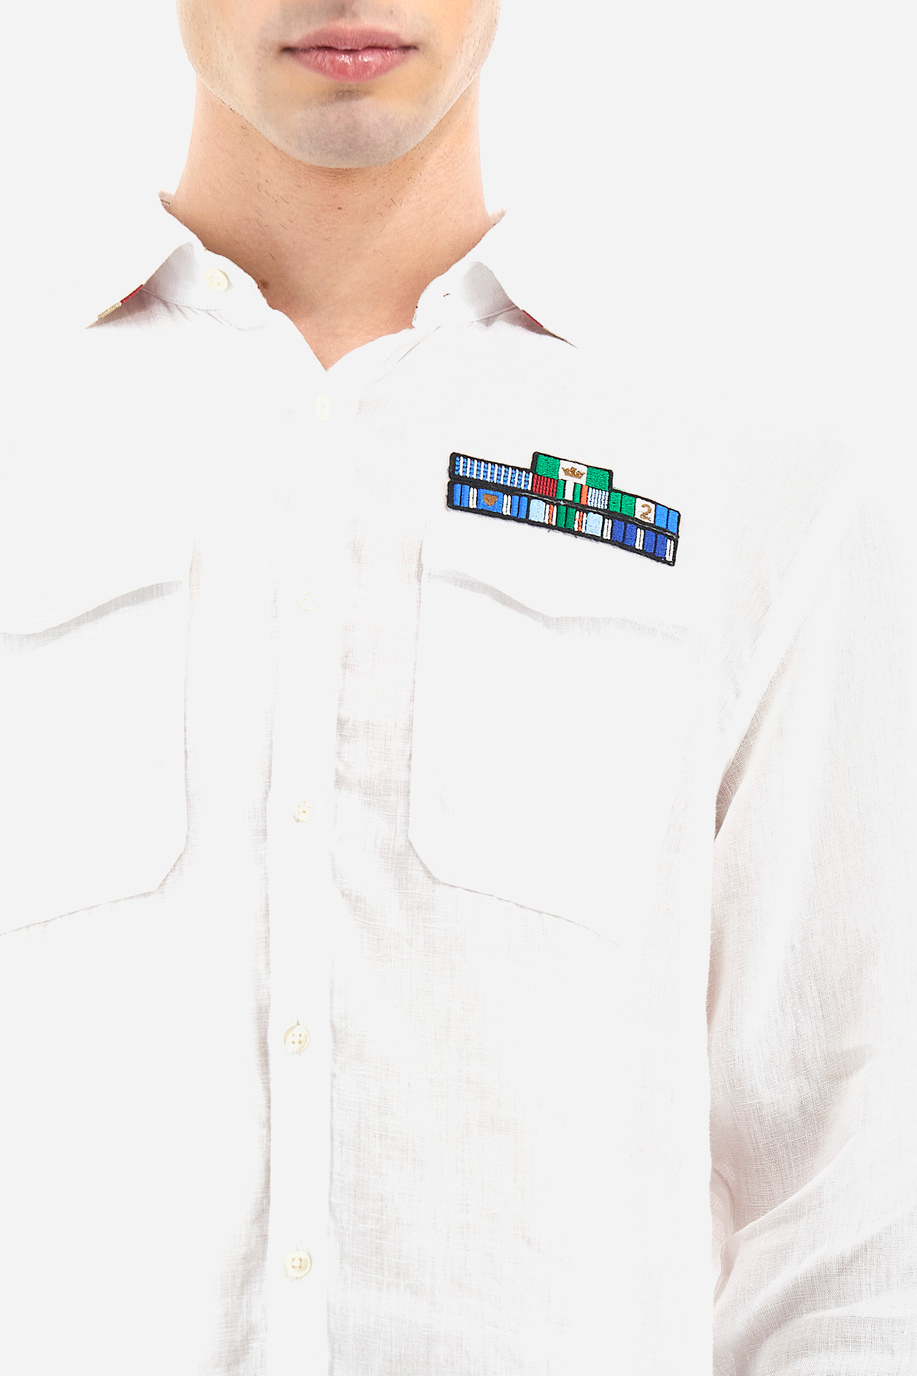 Langärmliges Herrenhemd aus 100 % Leinen in normaler Passform - Viviano - Guards - England | La Martina - Official Online Shop